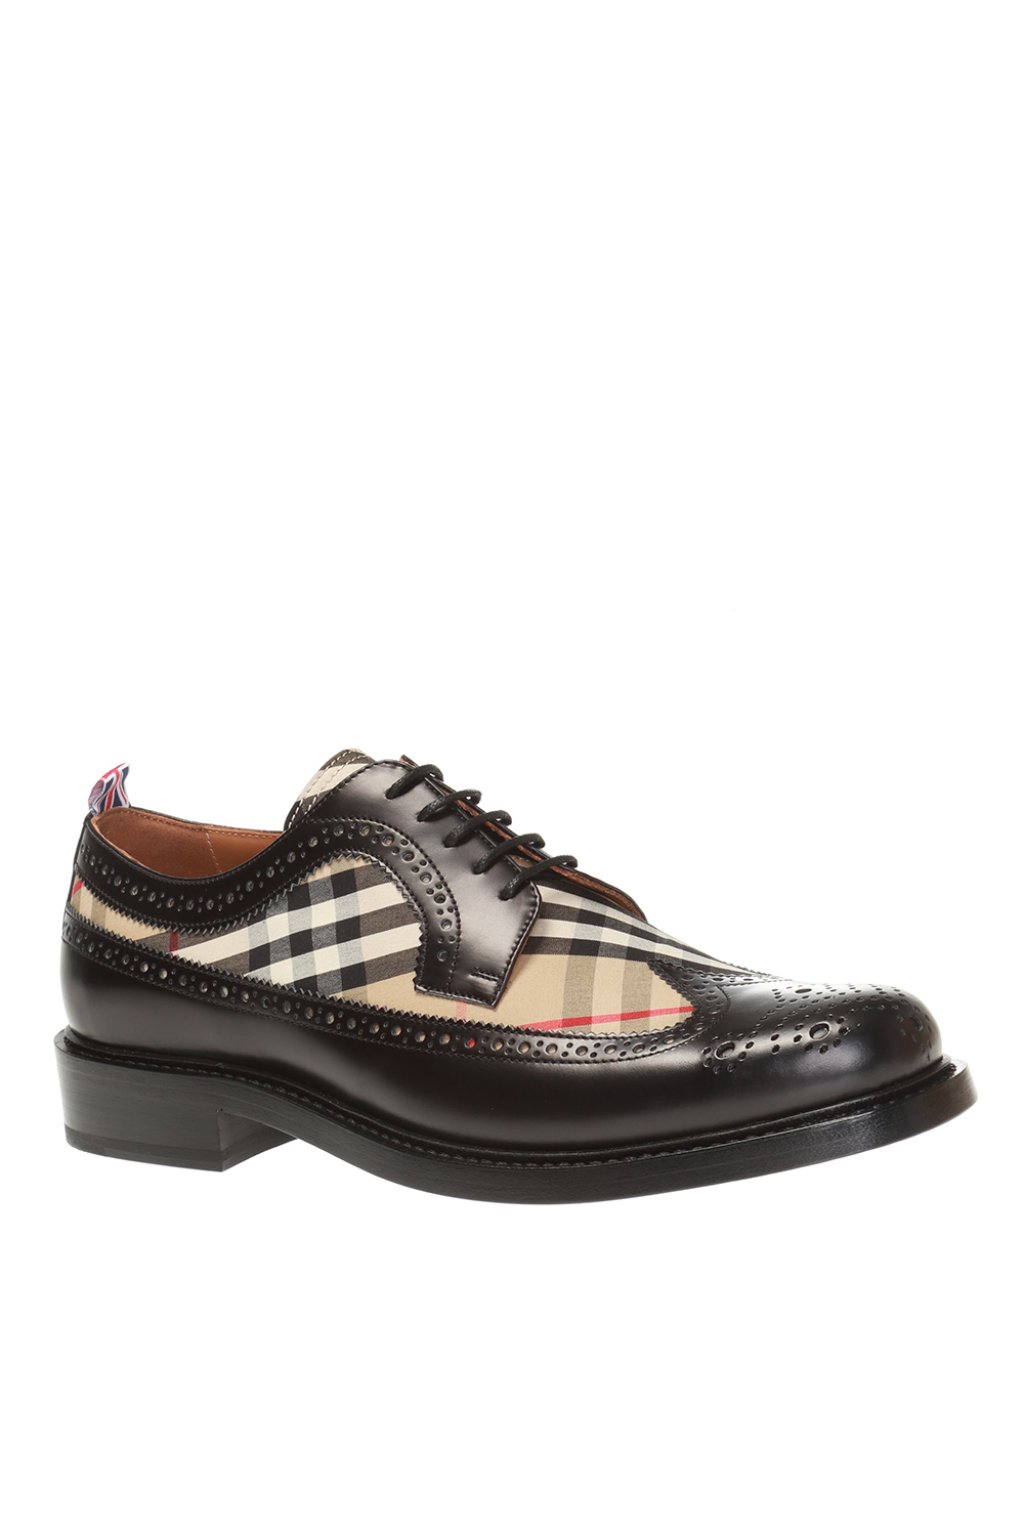 Arndale' lace-up shoes Burberry - Vitkac US